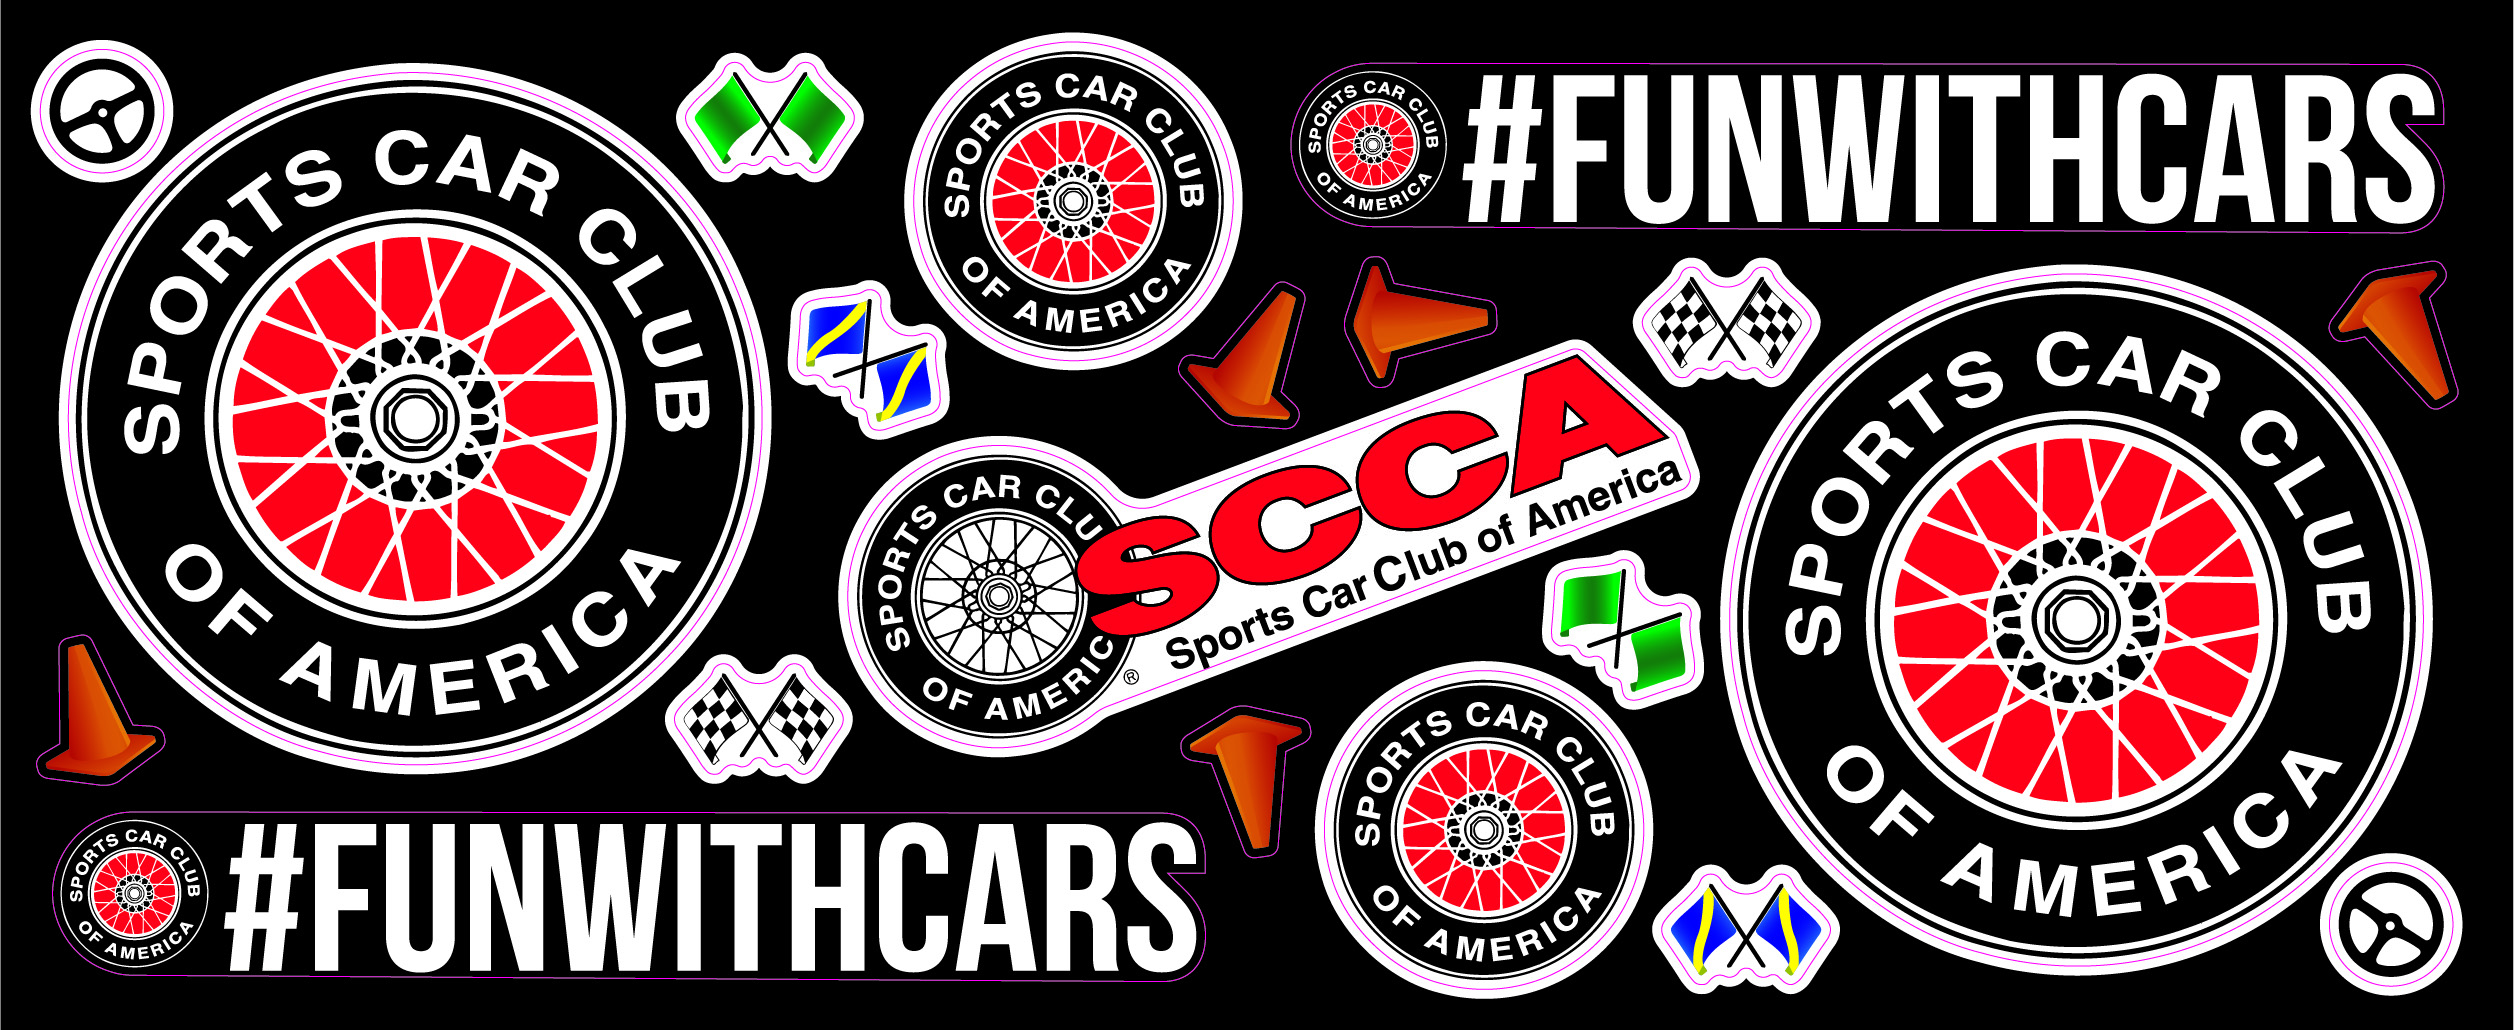 2630 SCCA Sticker Sheet (#funwithcars) (8 1/2" x 3 1/2")